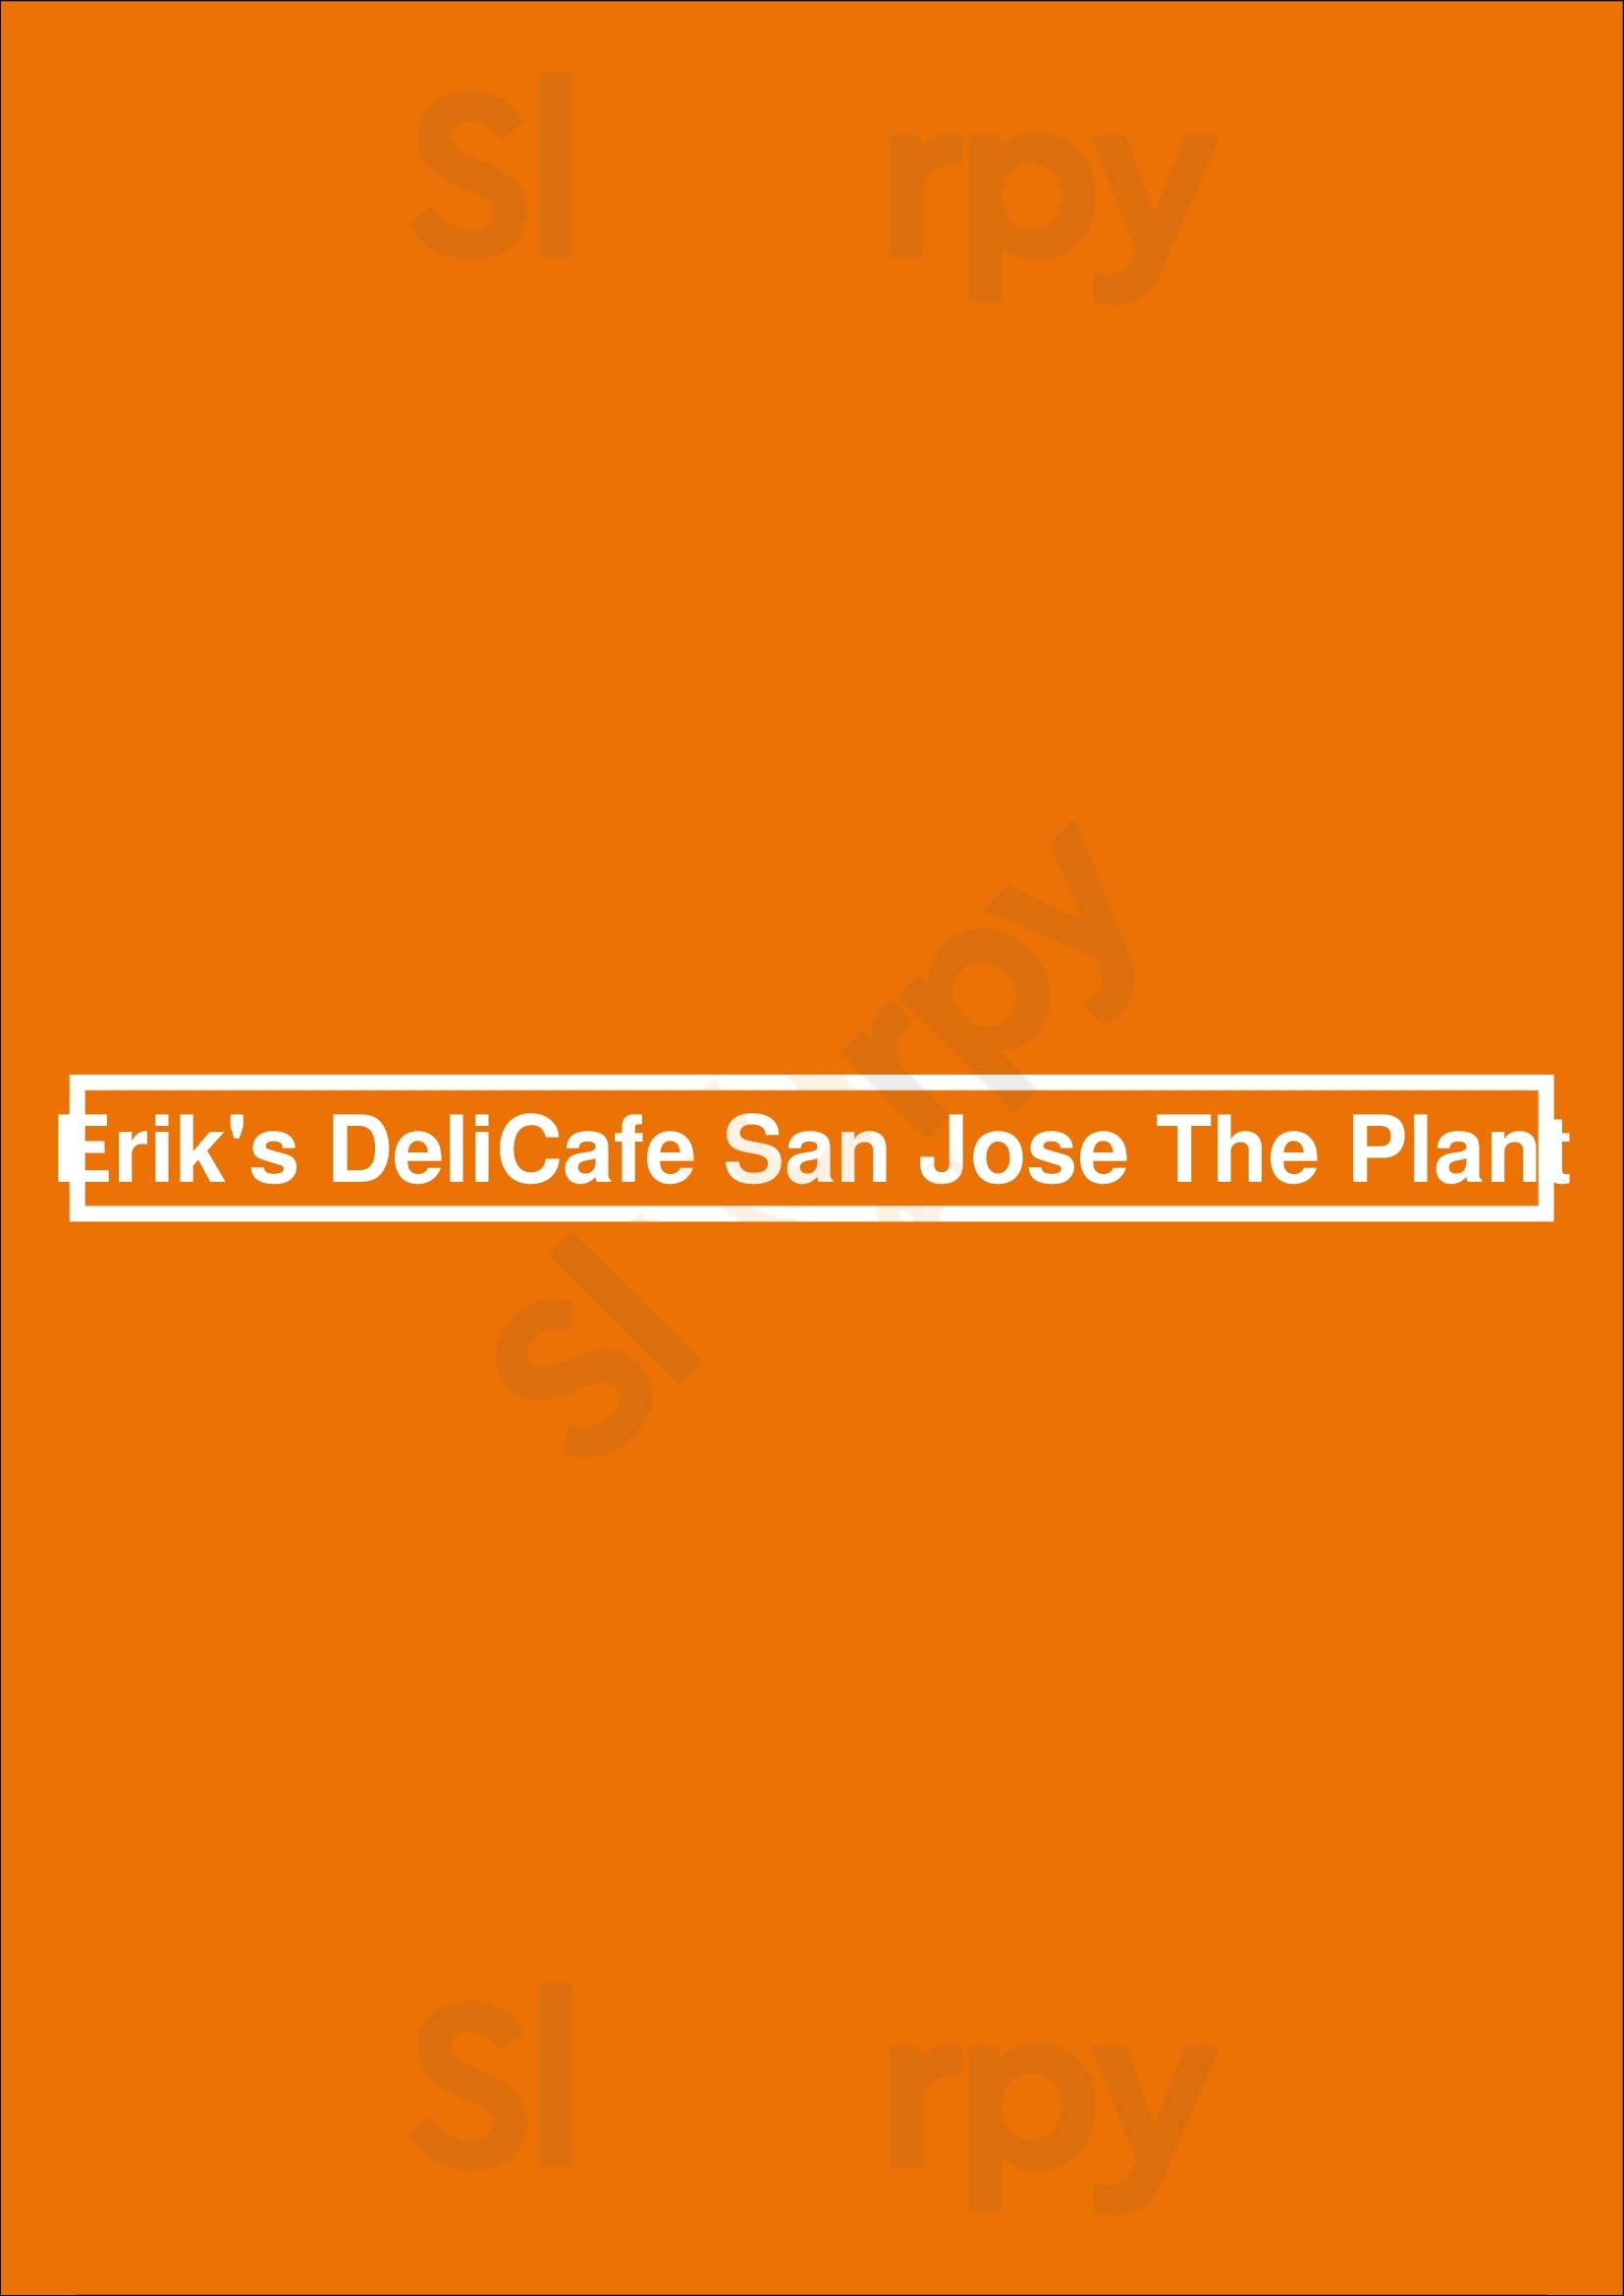 Erik's Delicafe San Jose The Plant San Jose Menu - 1